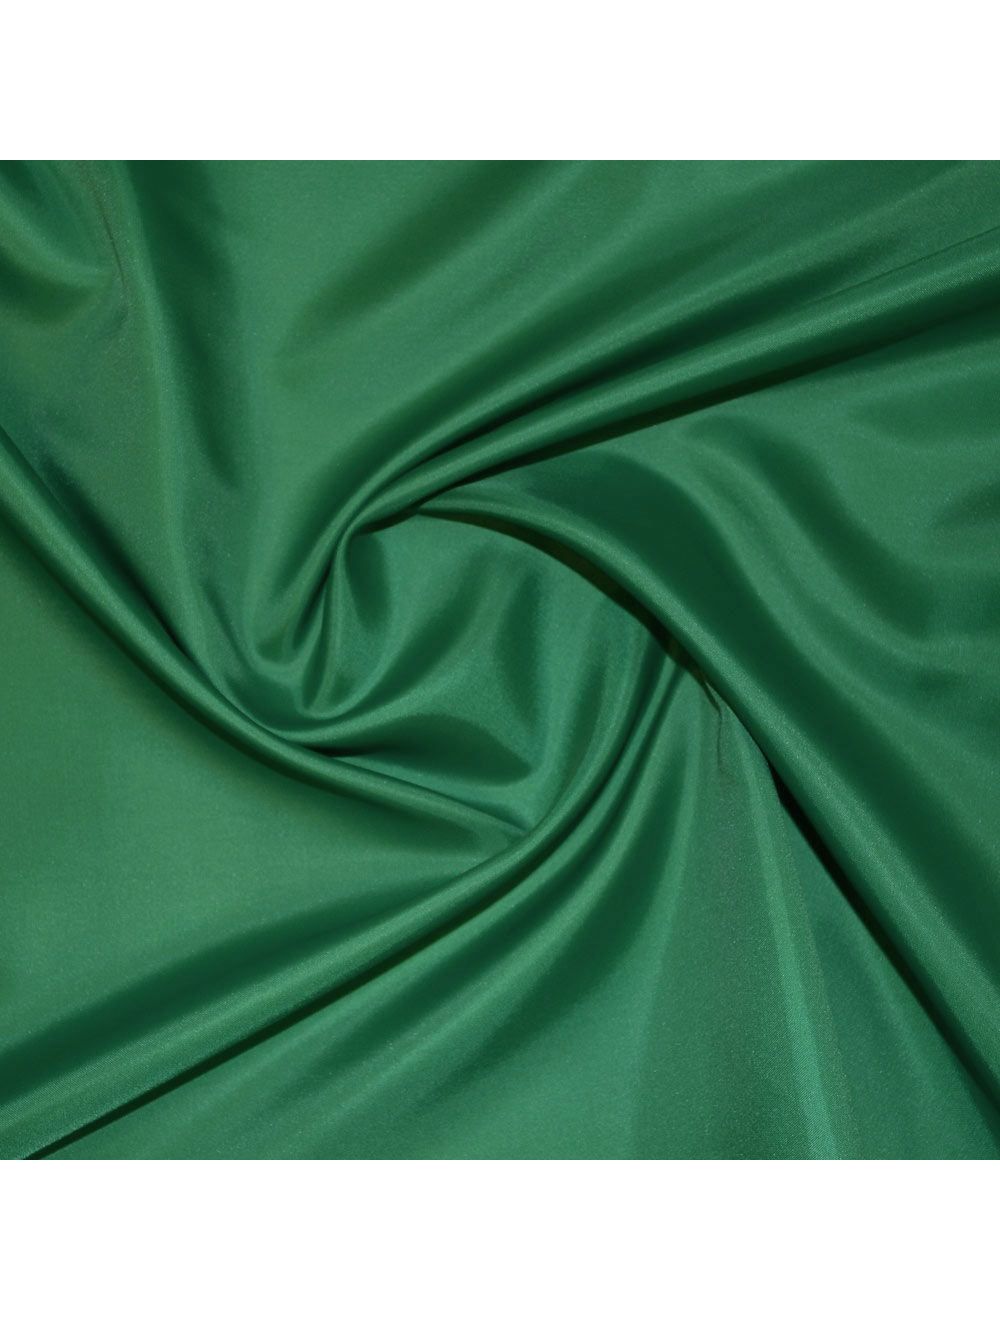 Green Super Soft Dress Lining Fabric | Calico Laine